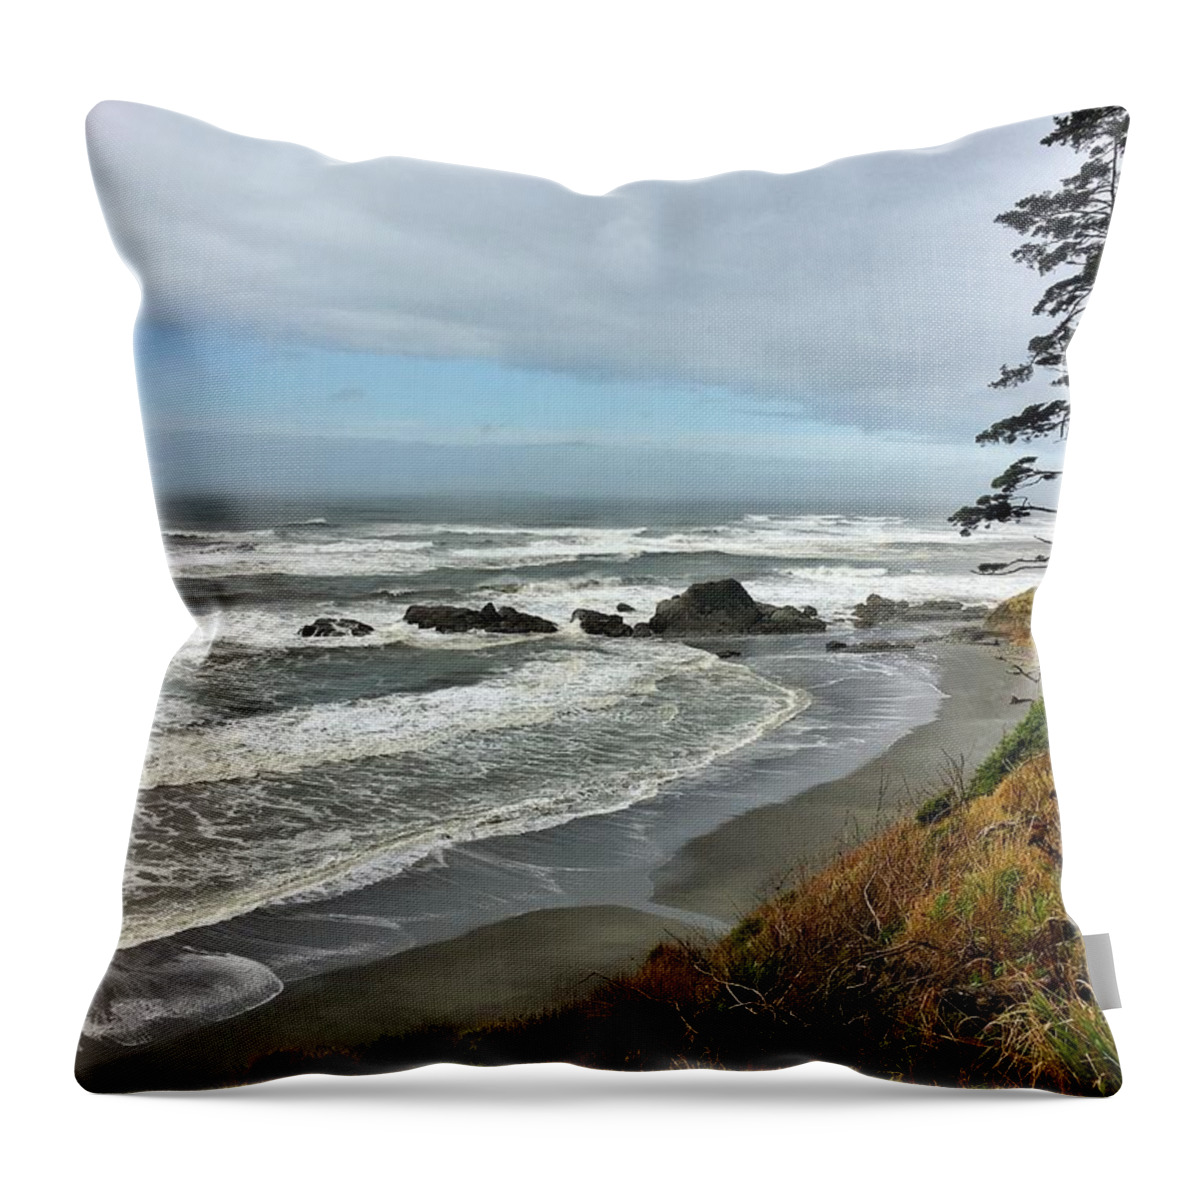 Washington Throw Pillow featuring the photograph Washington Coastline by Jerry Abbott